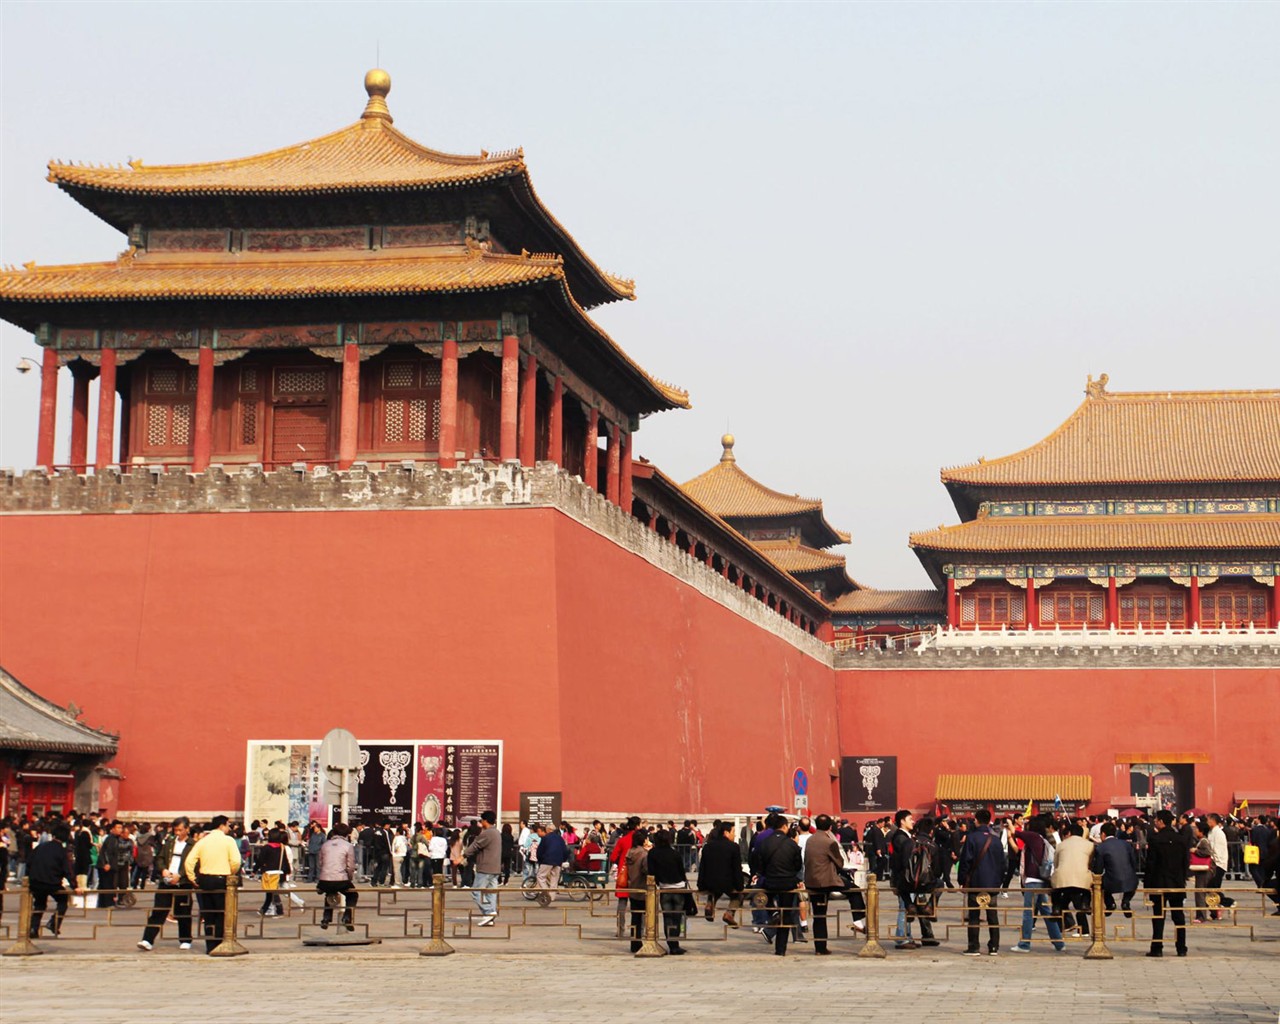 Tour Beijing - Tiananmen Square (ggc works) #5 - 1280x1024